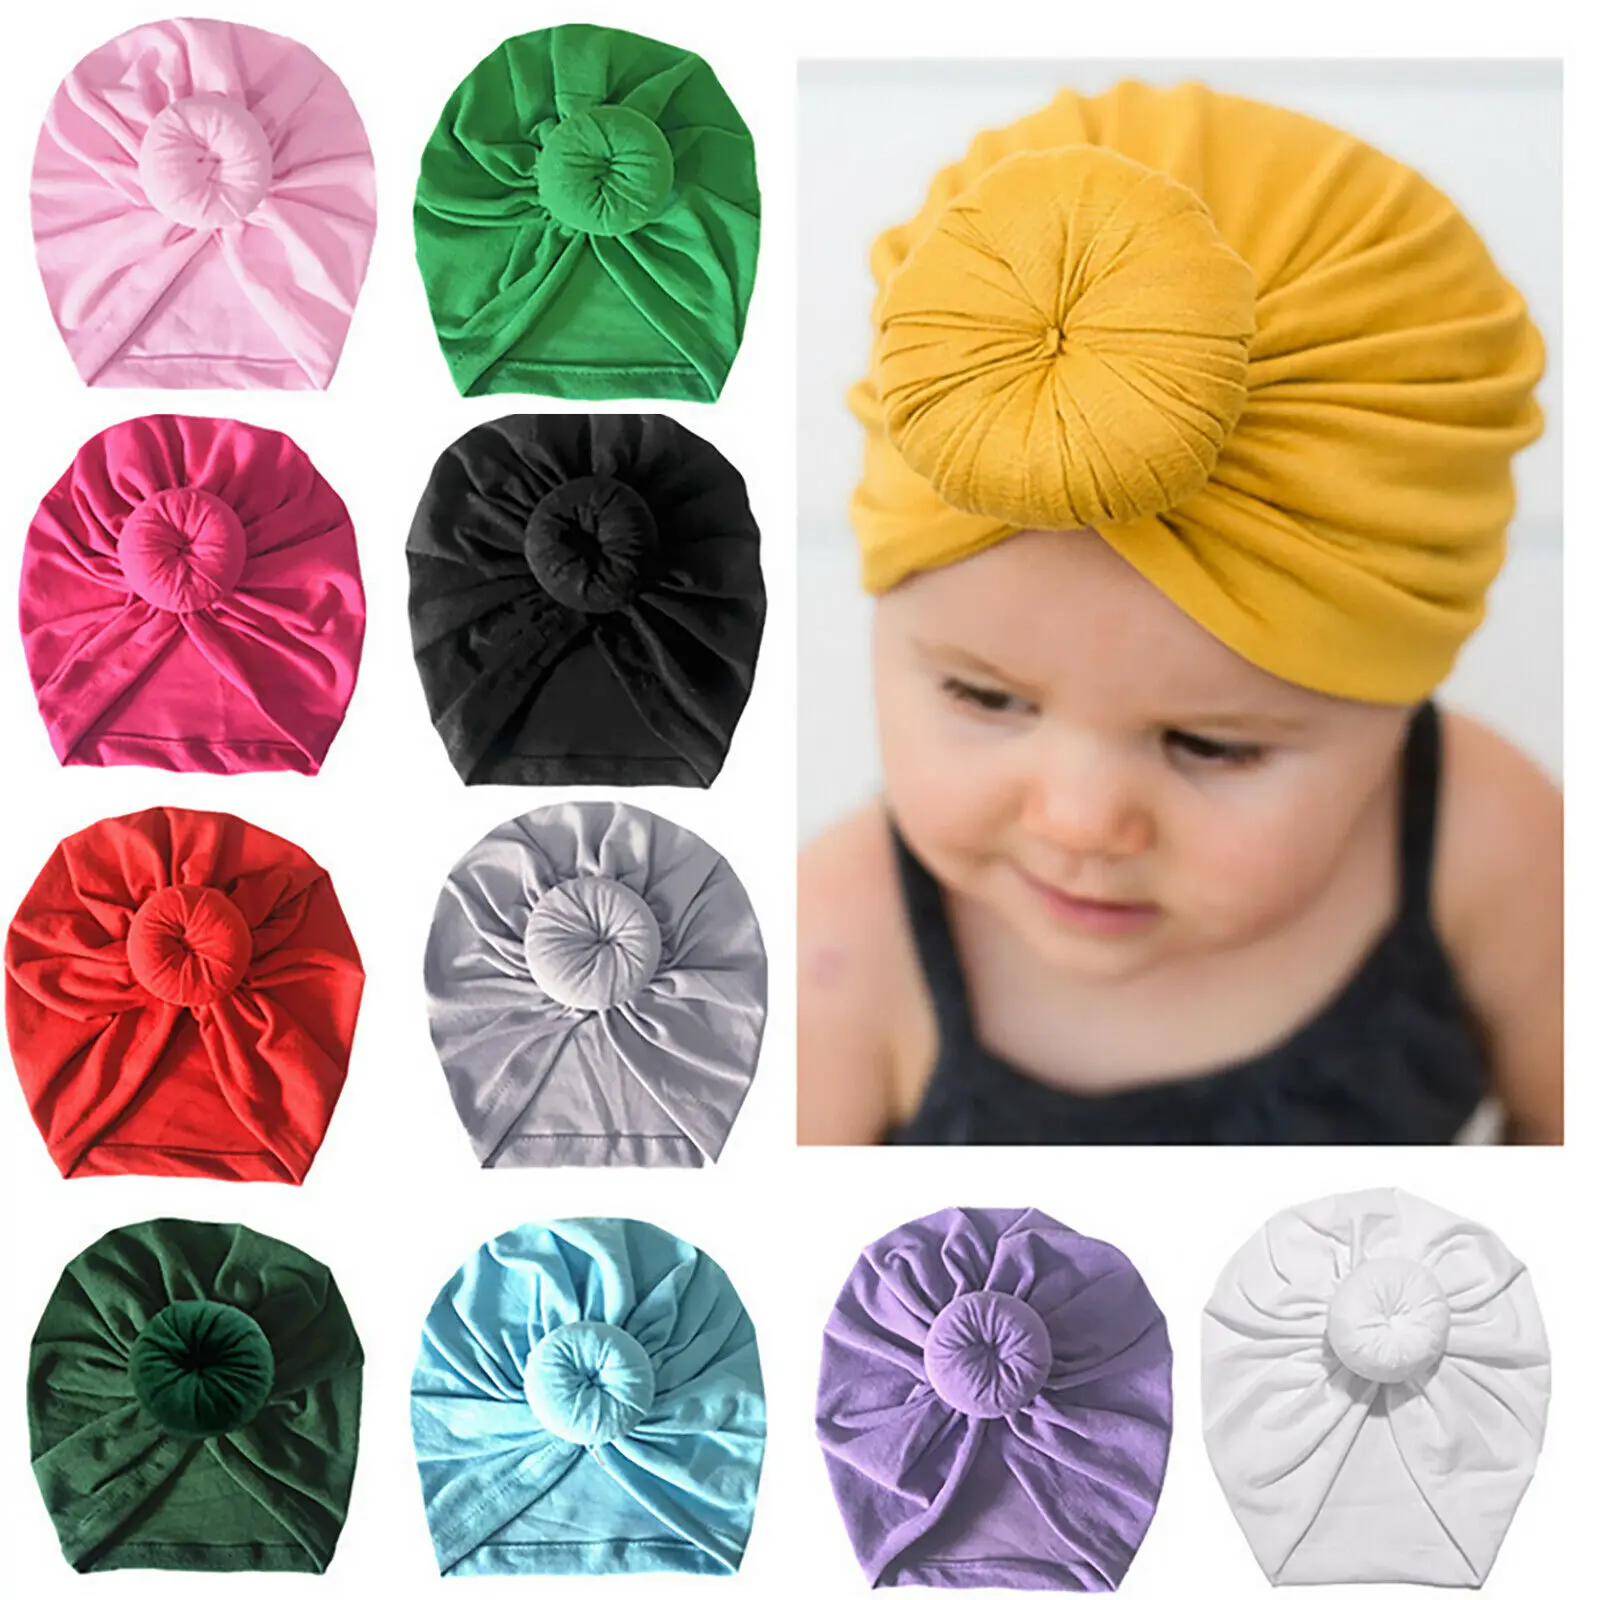 Infant Kids Newborn Baby Turban Knotted Head Wrap Headbands India Hats Beanie Cotton blend Hair Cap 